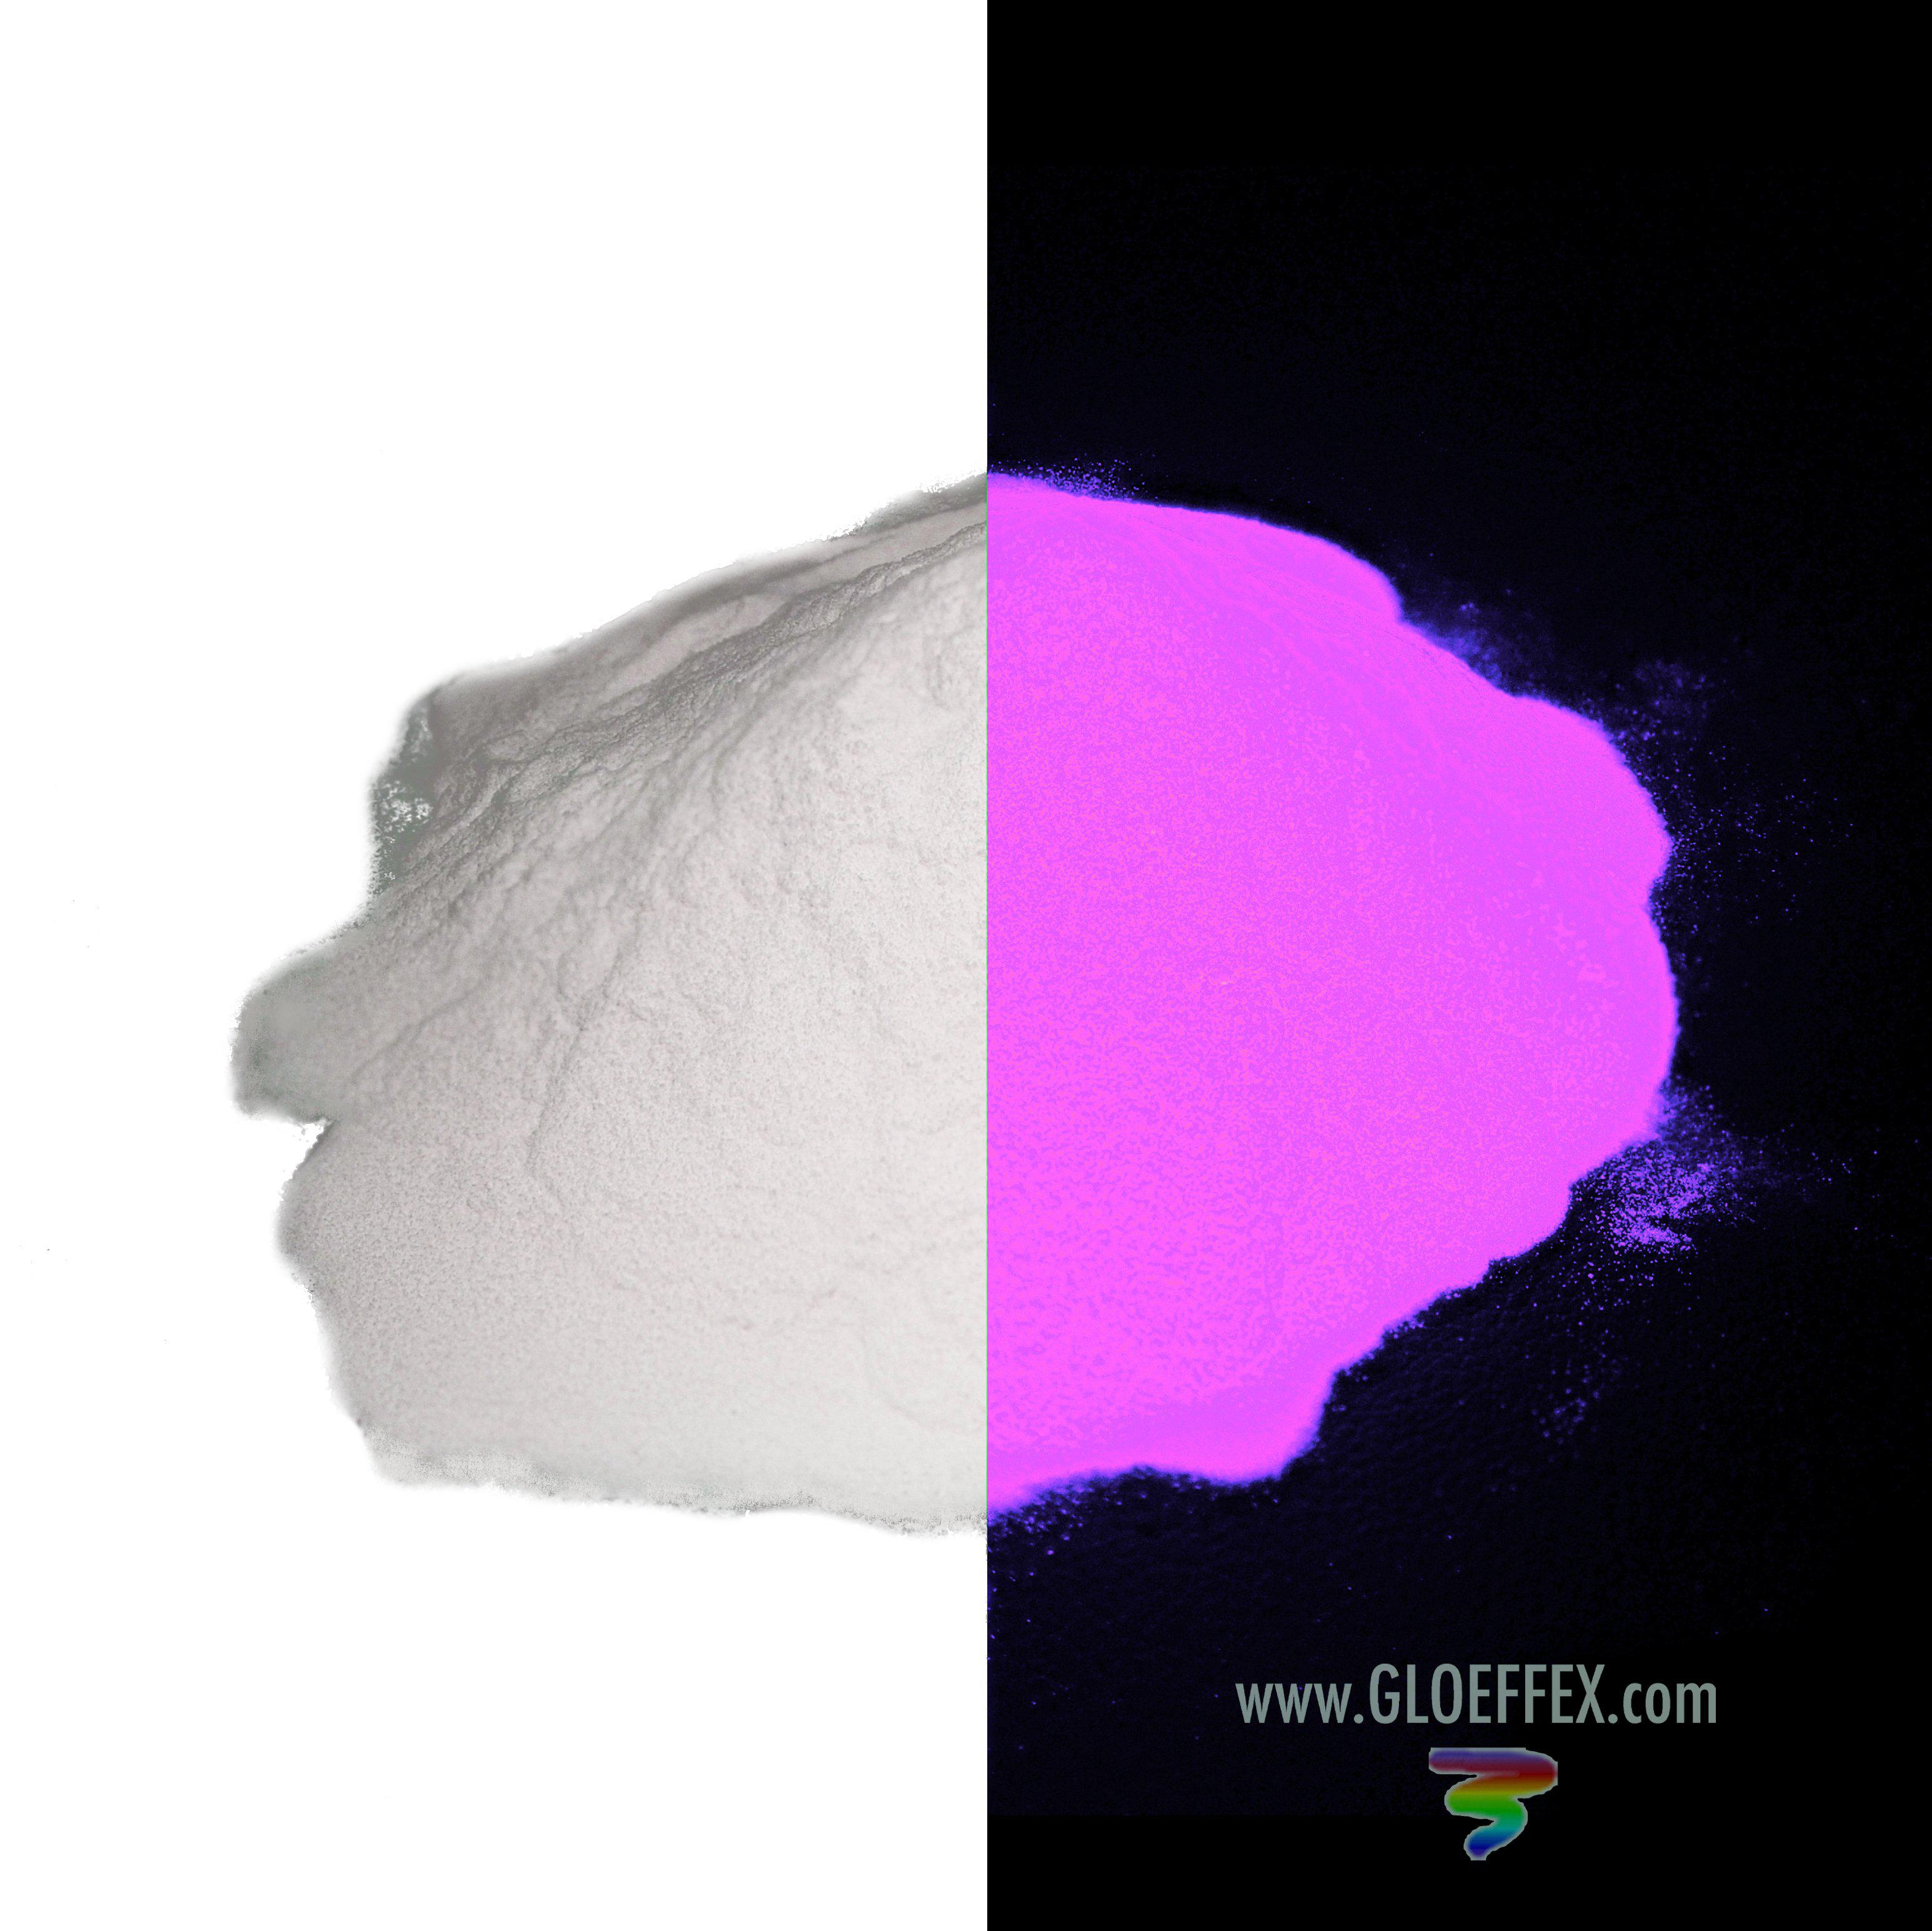 Phosphorescent glow in the dark pigments by pound